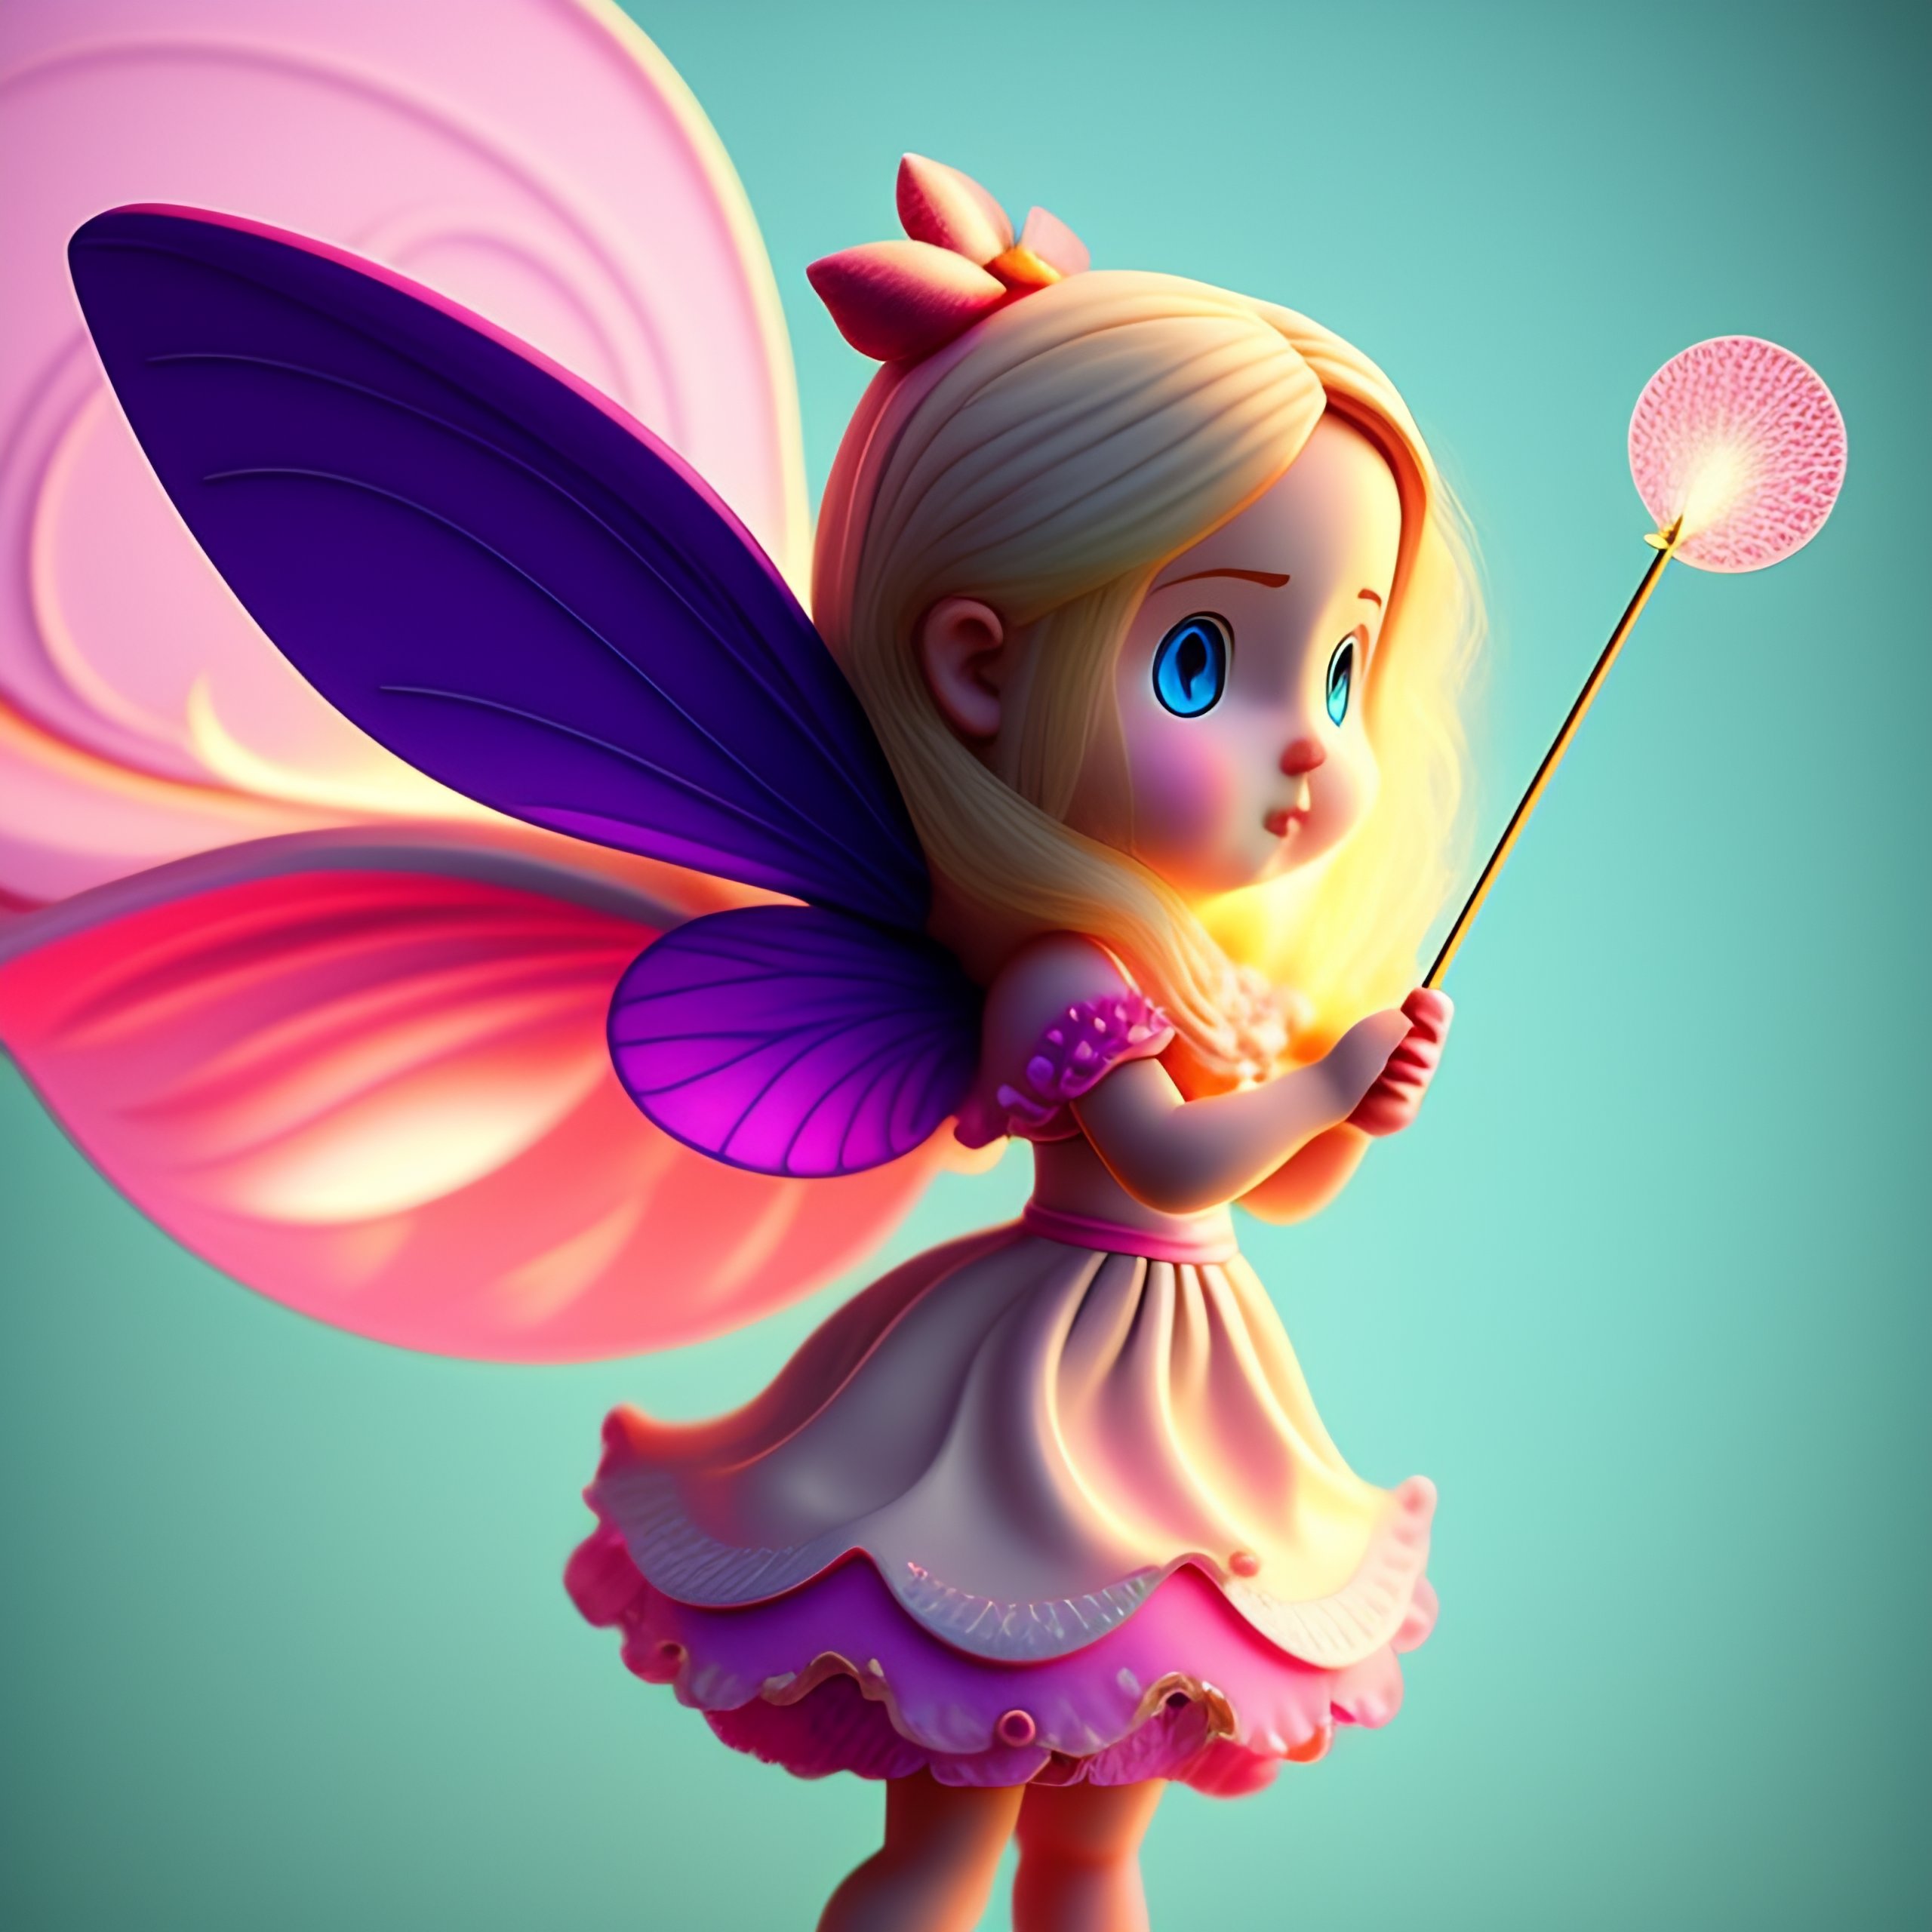 fairy with wand cartoon